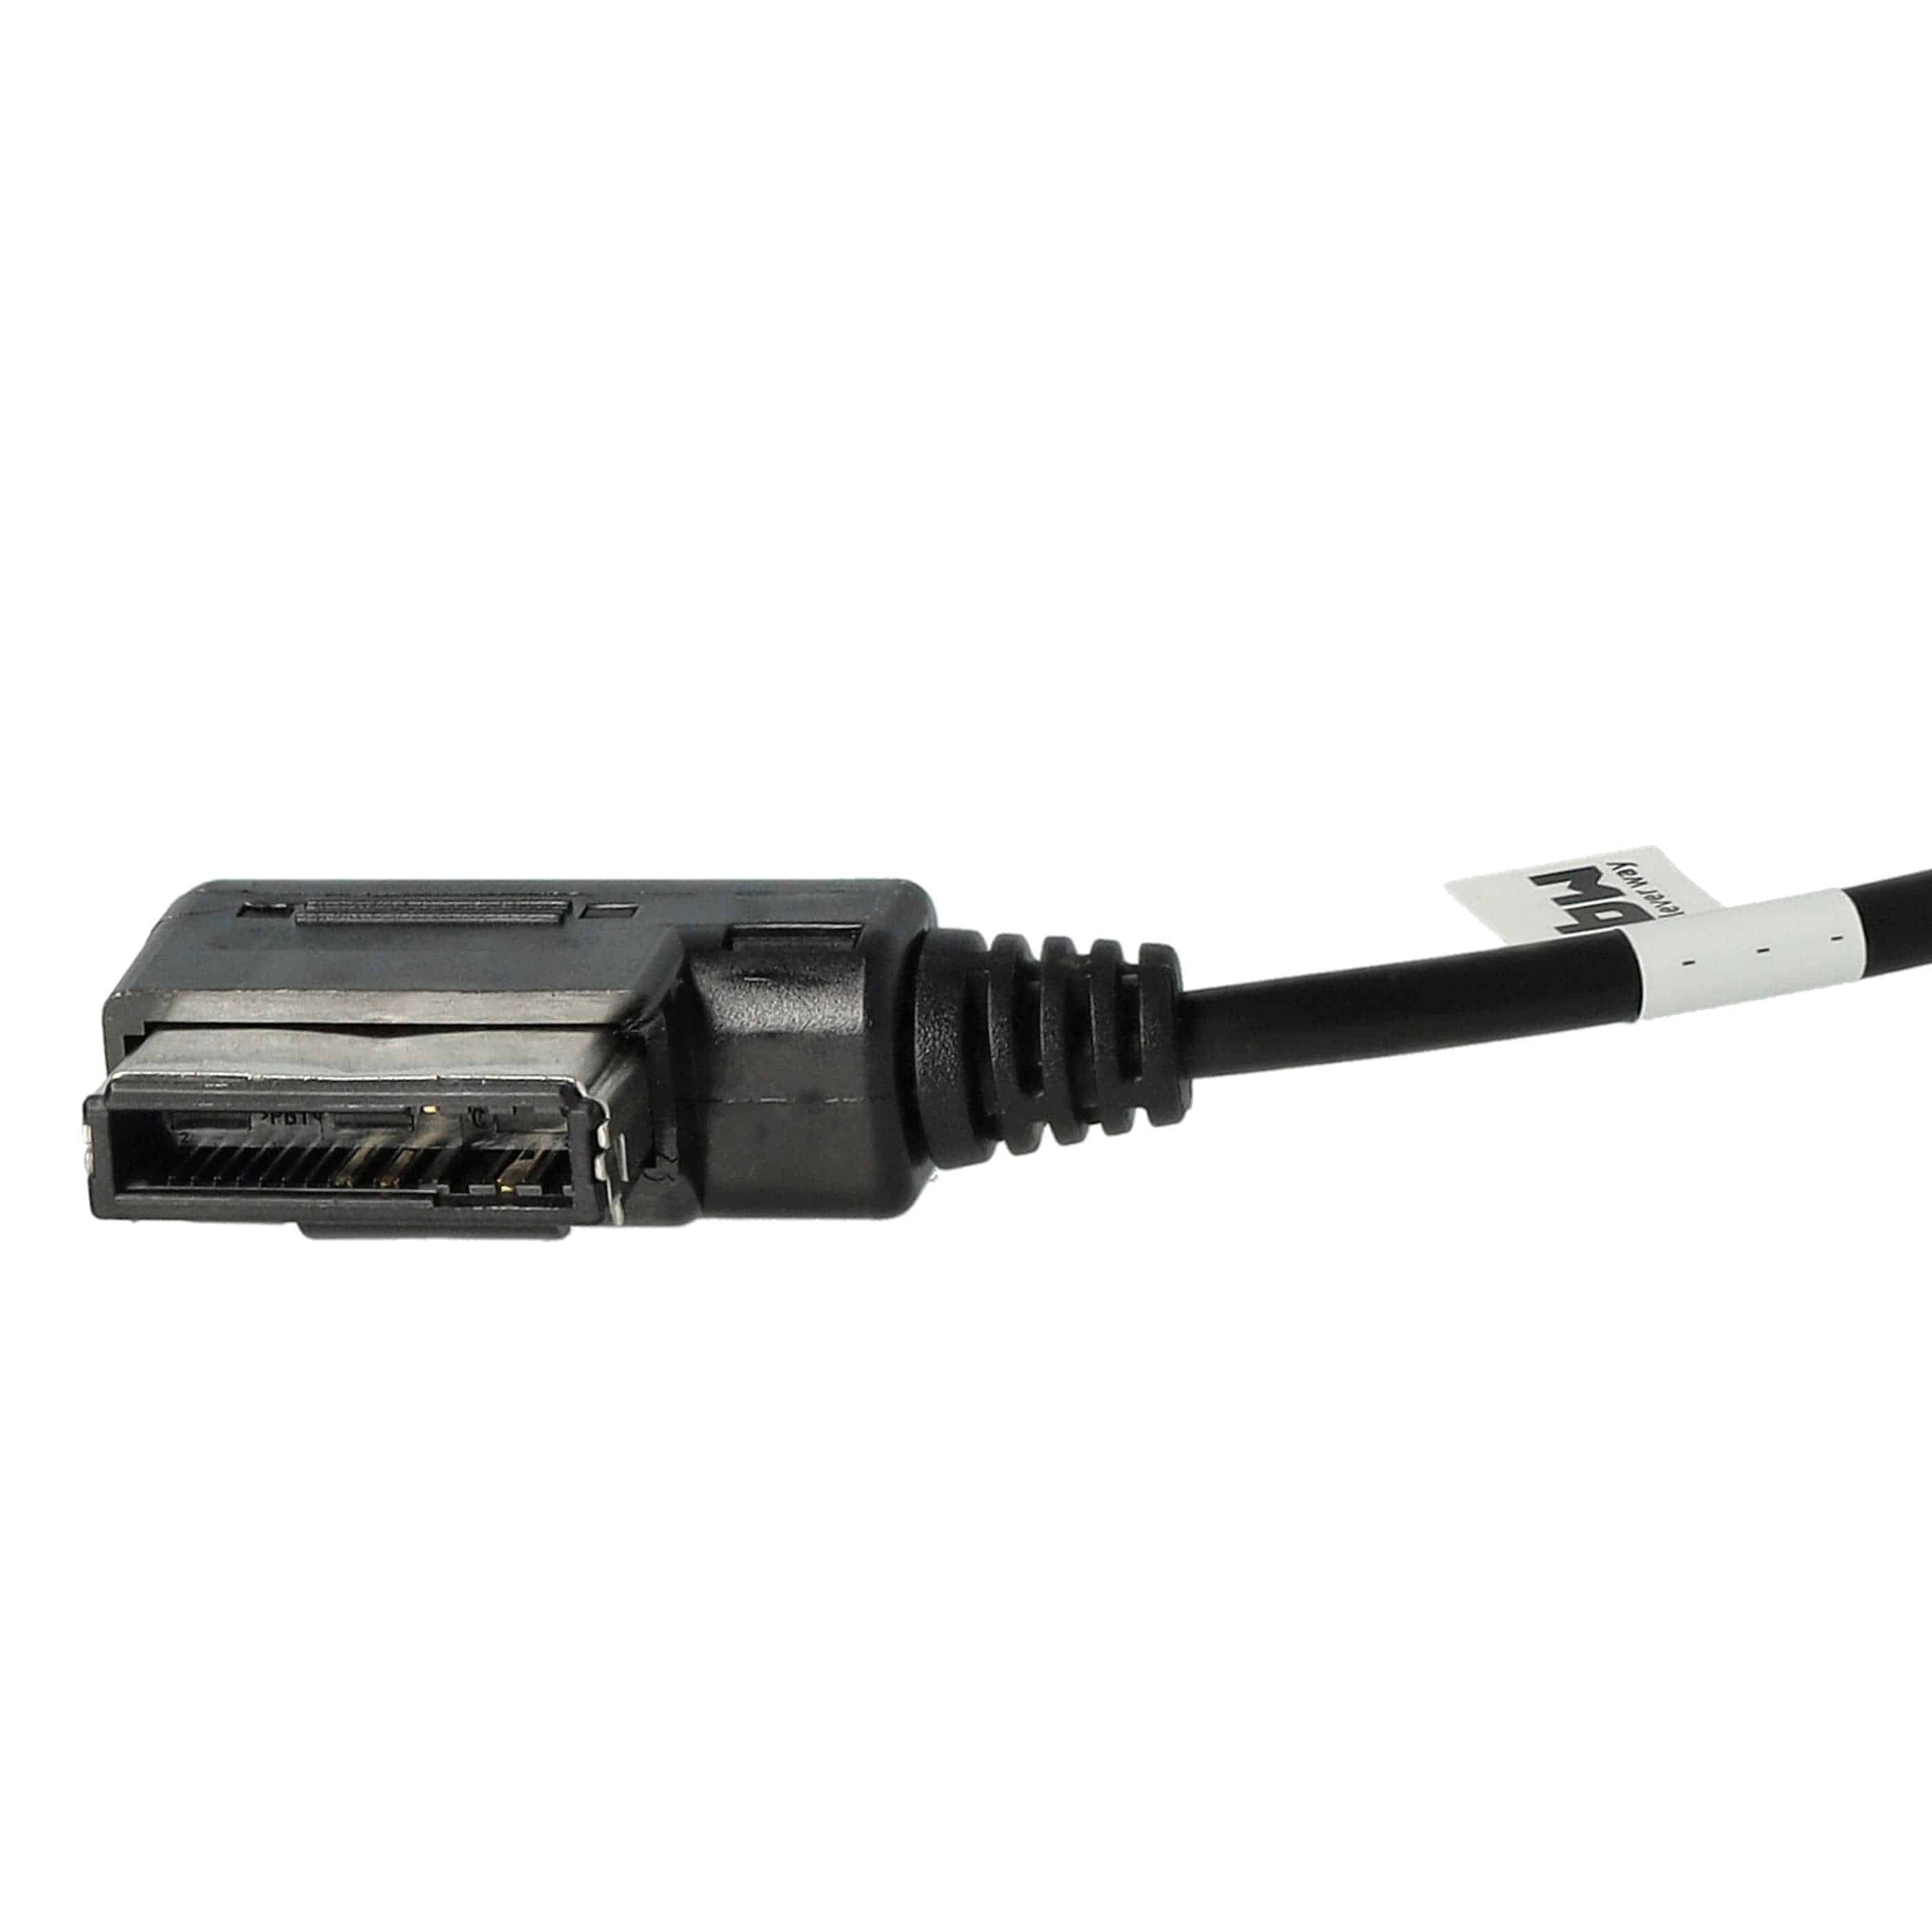 Audio Cable suitable for A1 Audi Car, Vehicle etc. - USB Adapter, 37.1 cm long